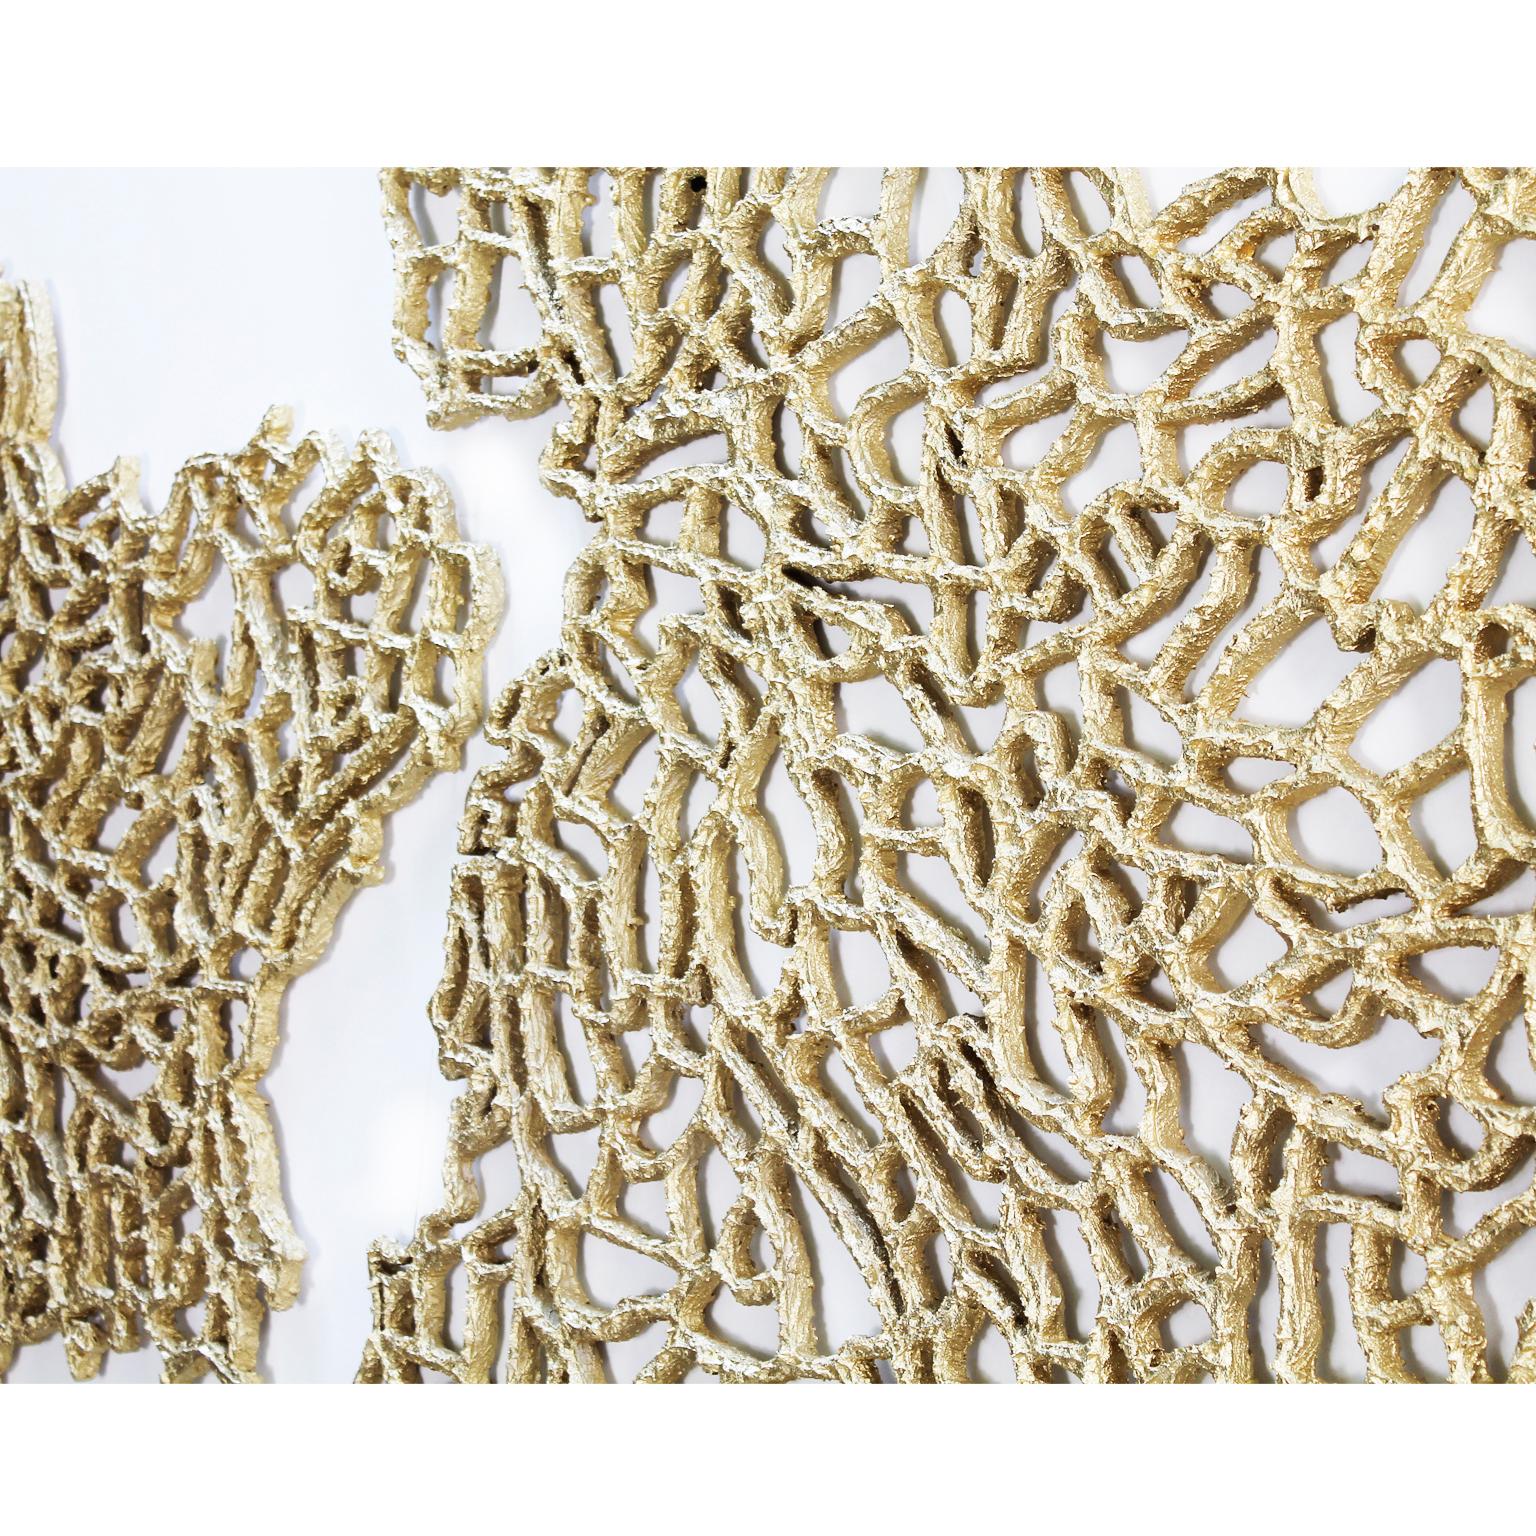 Golden Coral Ocean. Elegant Sculpture for Installing on Walls - Brown Abstract Sculpture by Arozarena De La Fuente